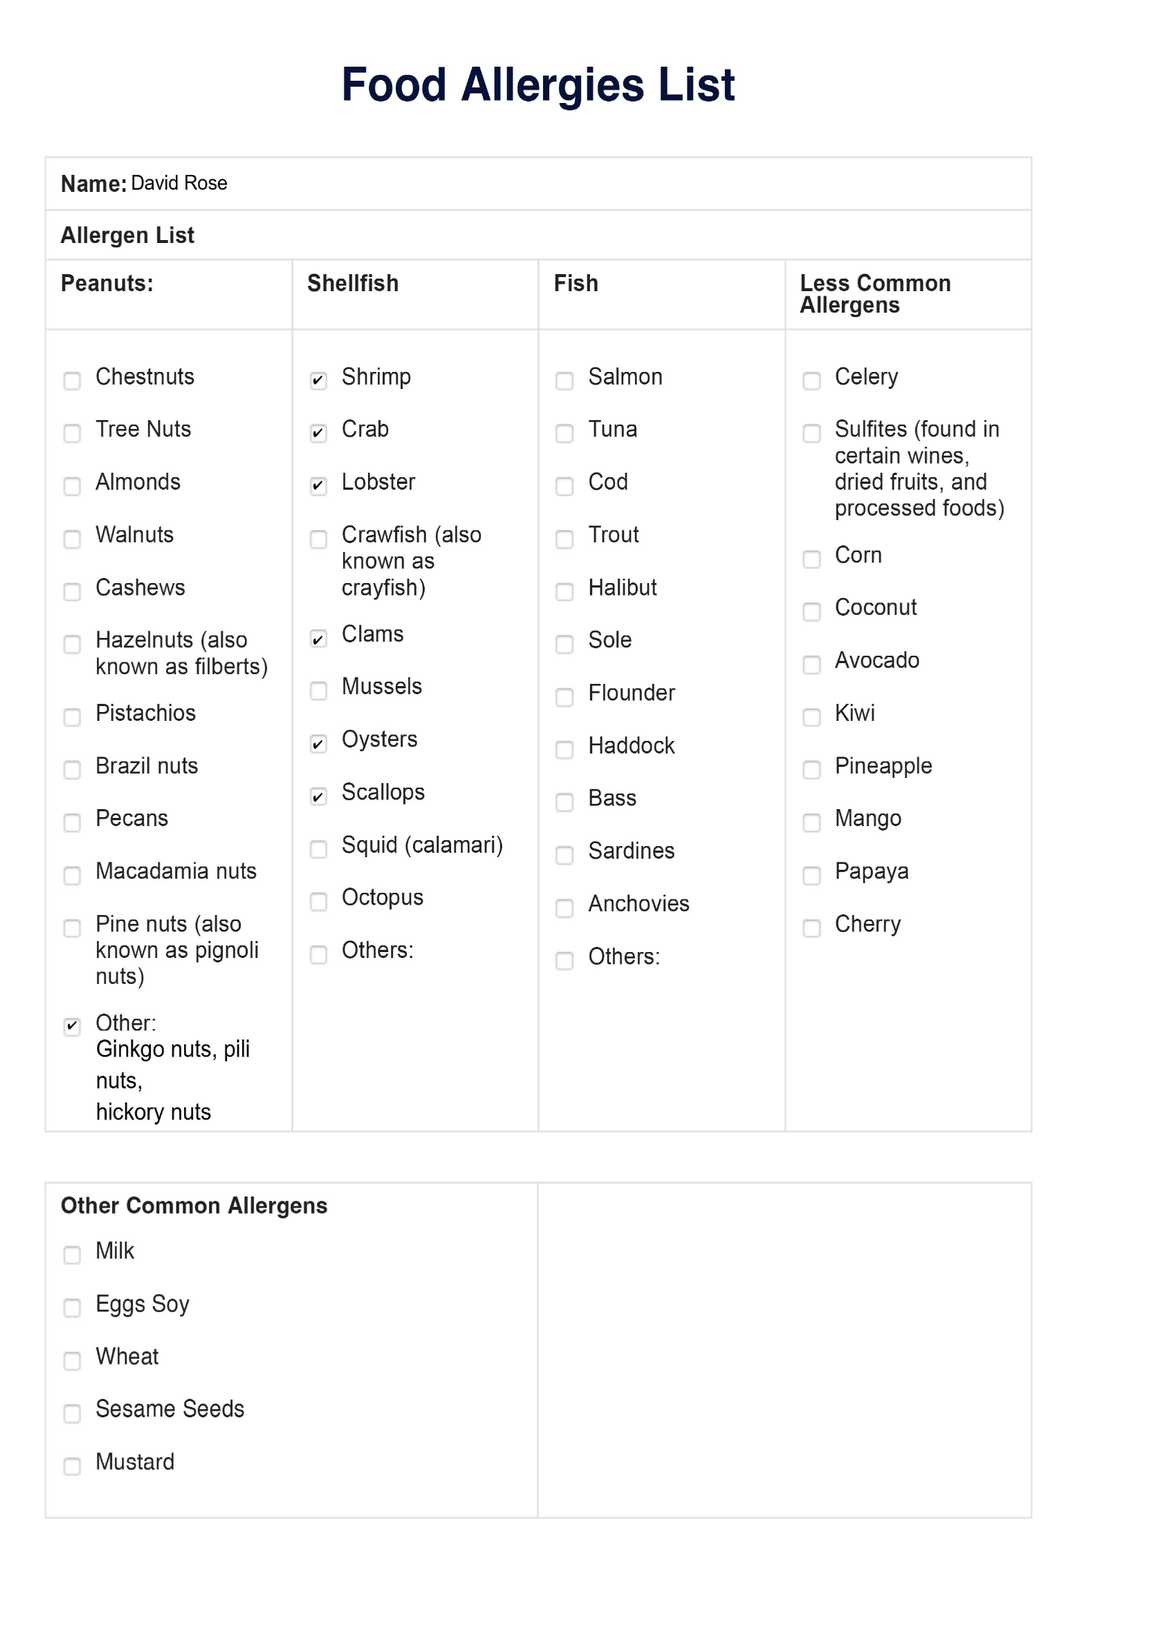 Food Allergies List Template PDF Example